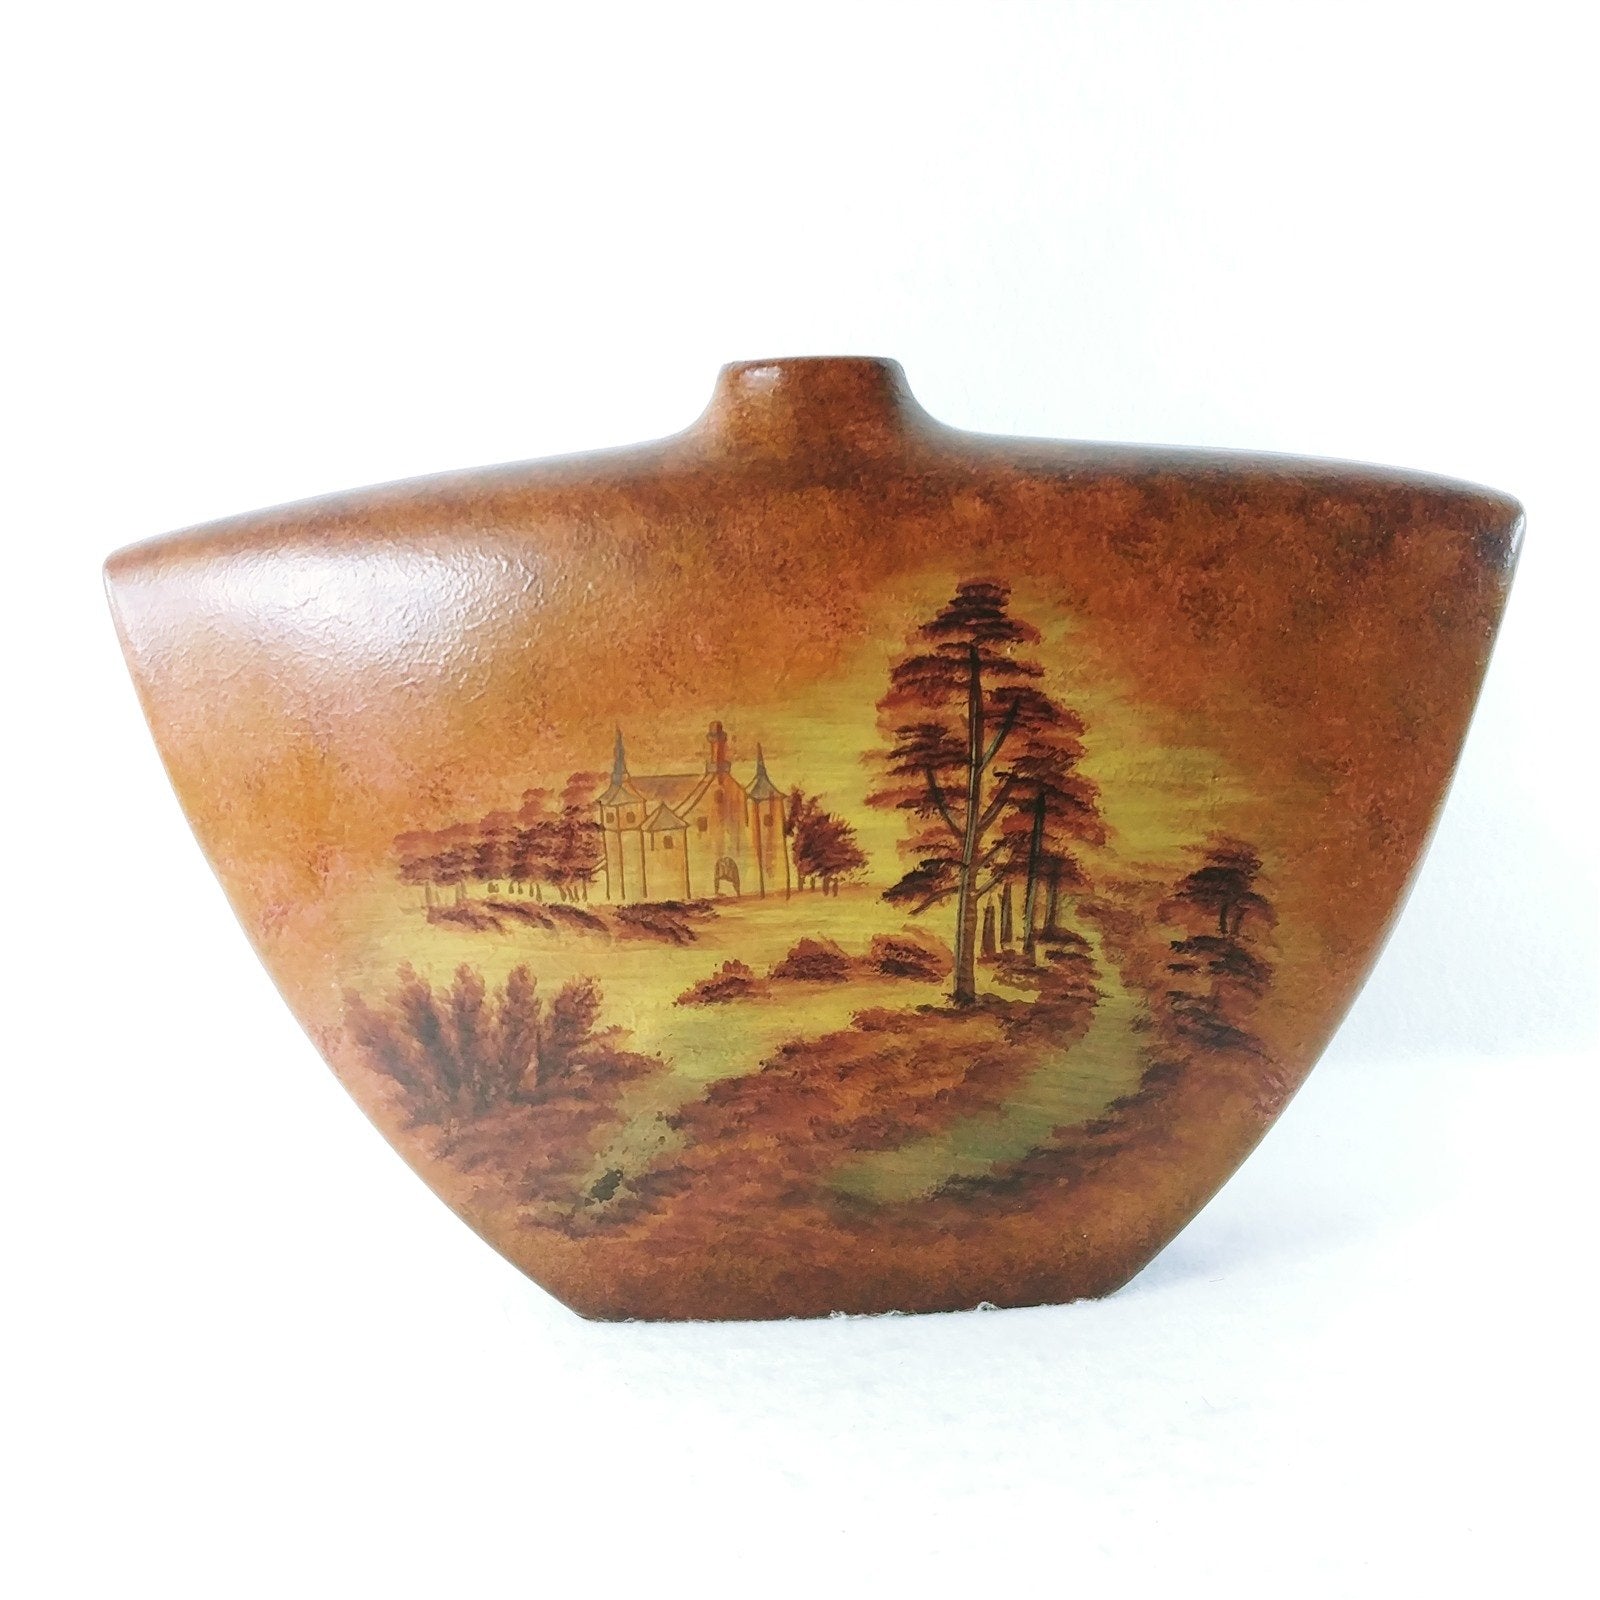 Vase Ceramic Hand Painted Outdoor Scene Brown